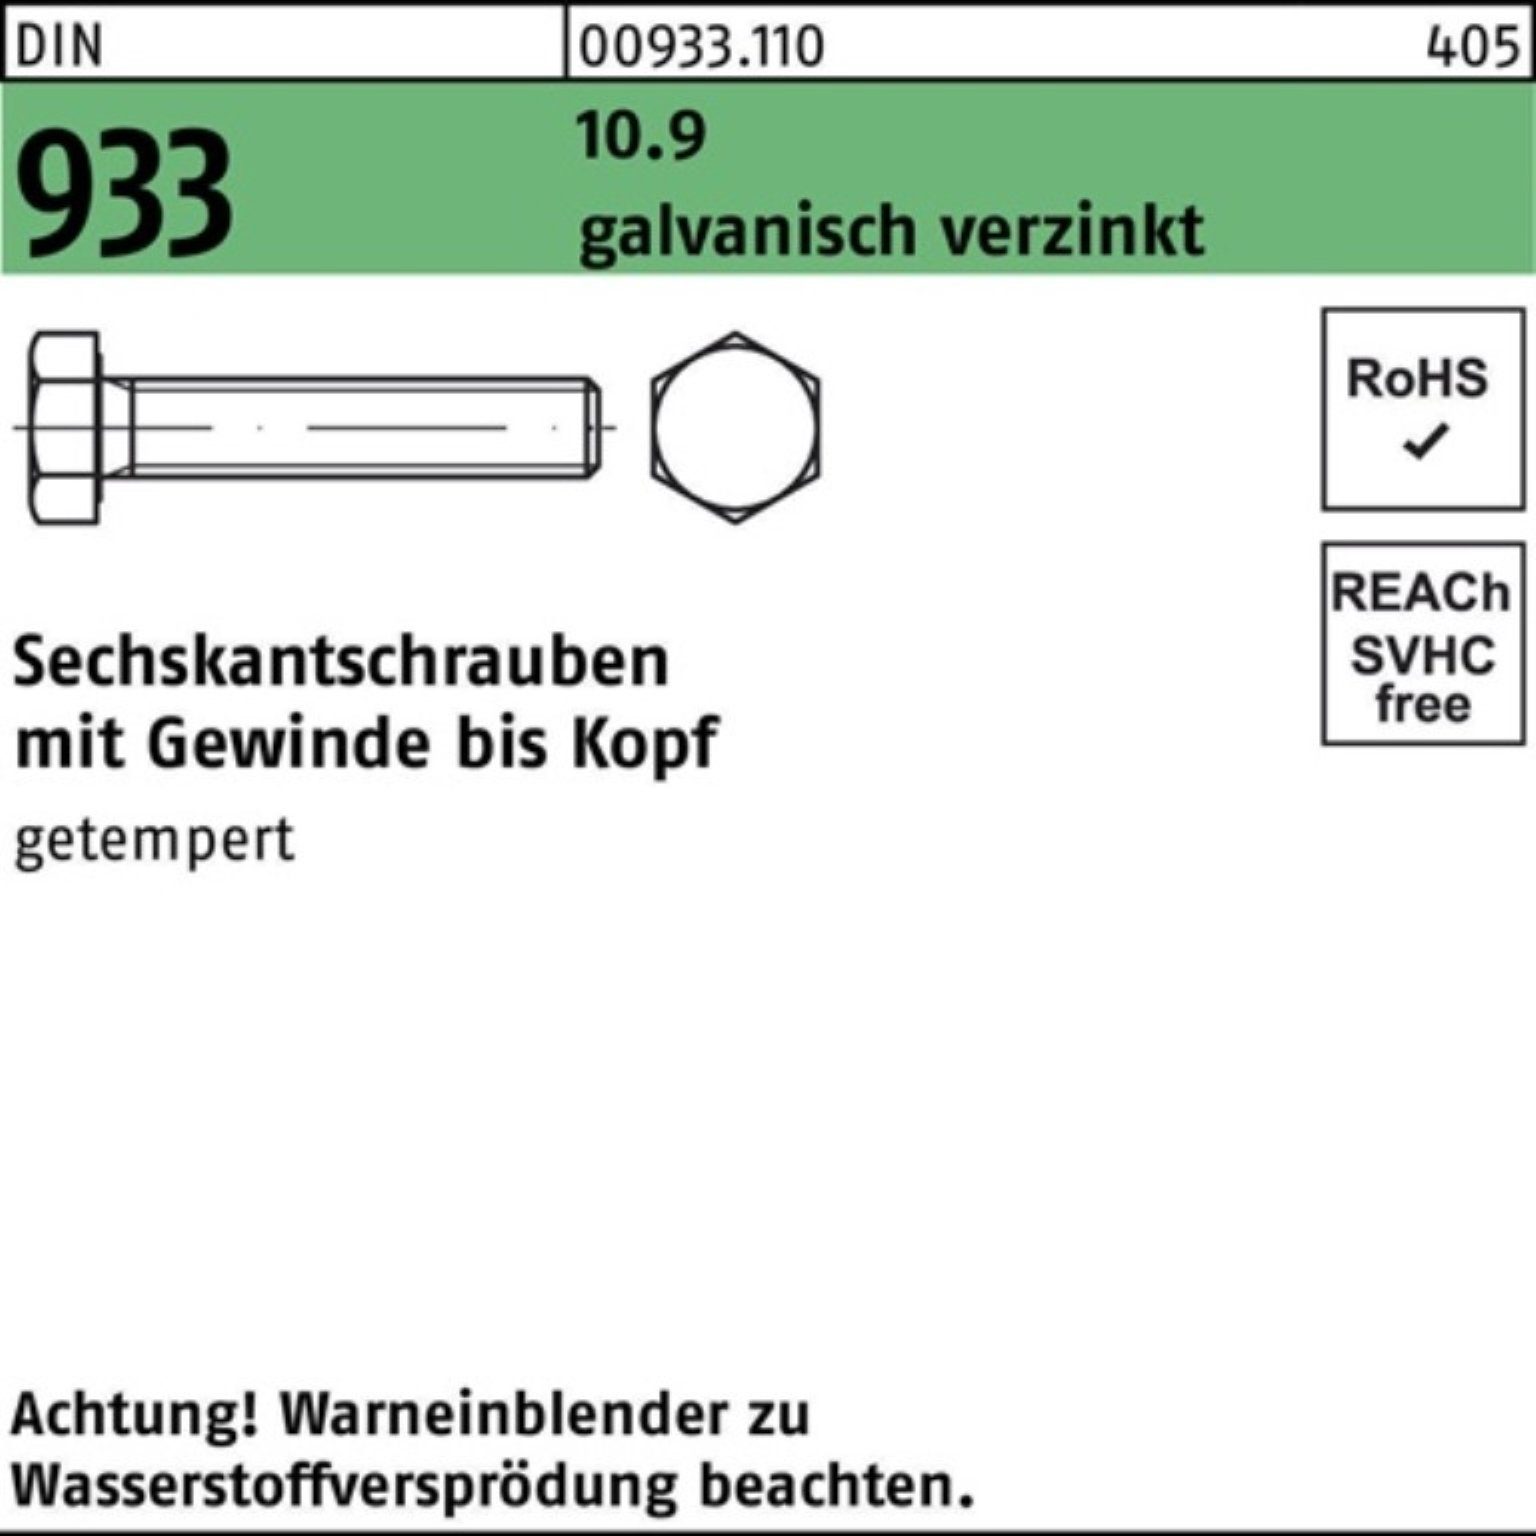 Reyher Sechskantschraube VG 1 Sechskantschraube 100er Pack 90 933 galv.verz. Stü DIN M30x 10.9